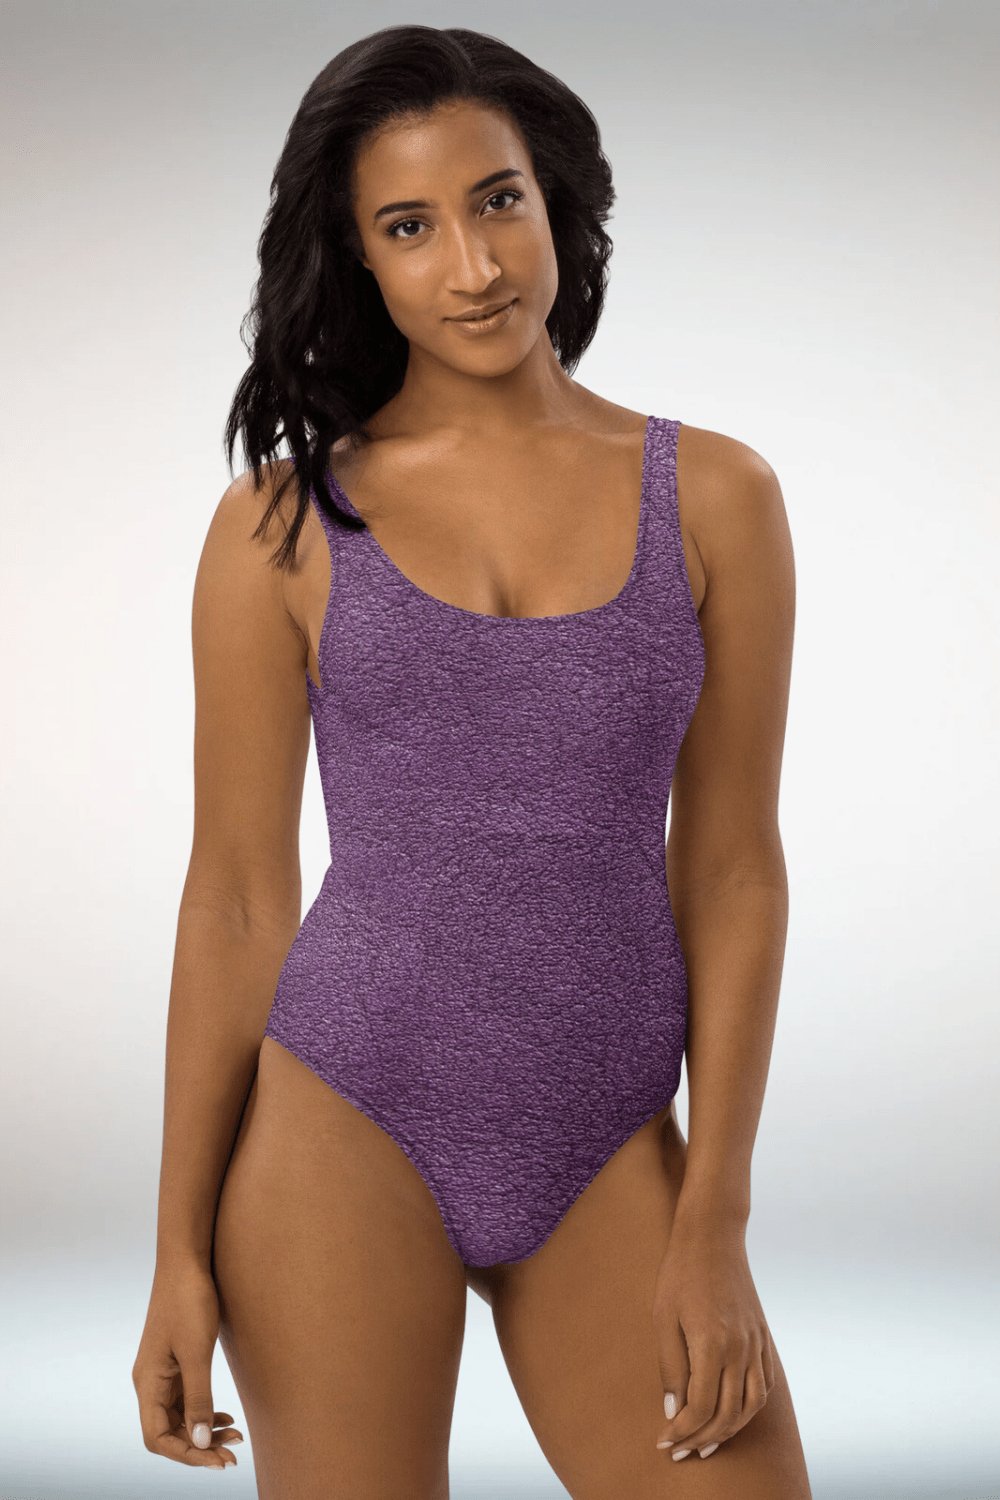 Leather Print Purple One Piece Swimsuit - TGC Boutique - One Piece Swimsuit